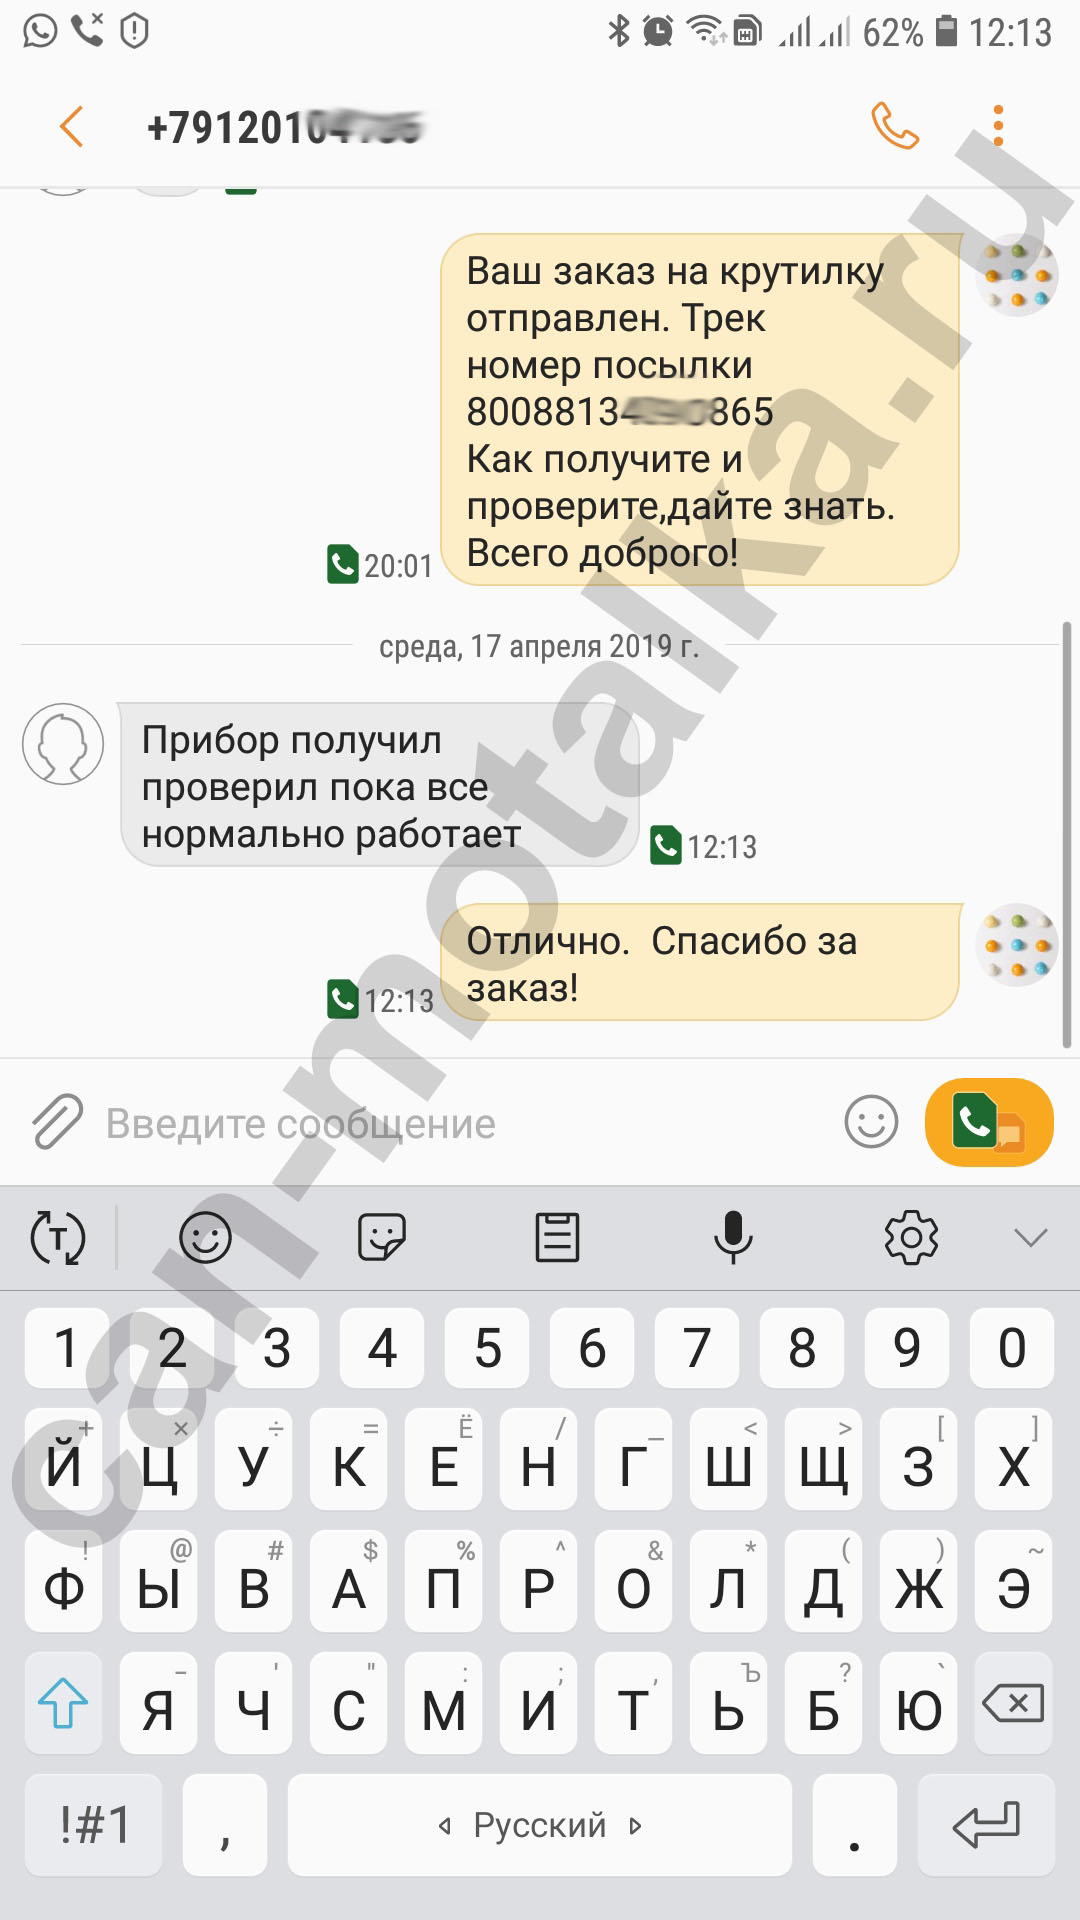 can-motalka.ru отзывы